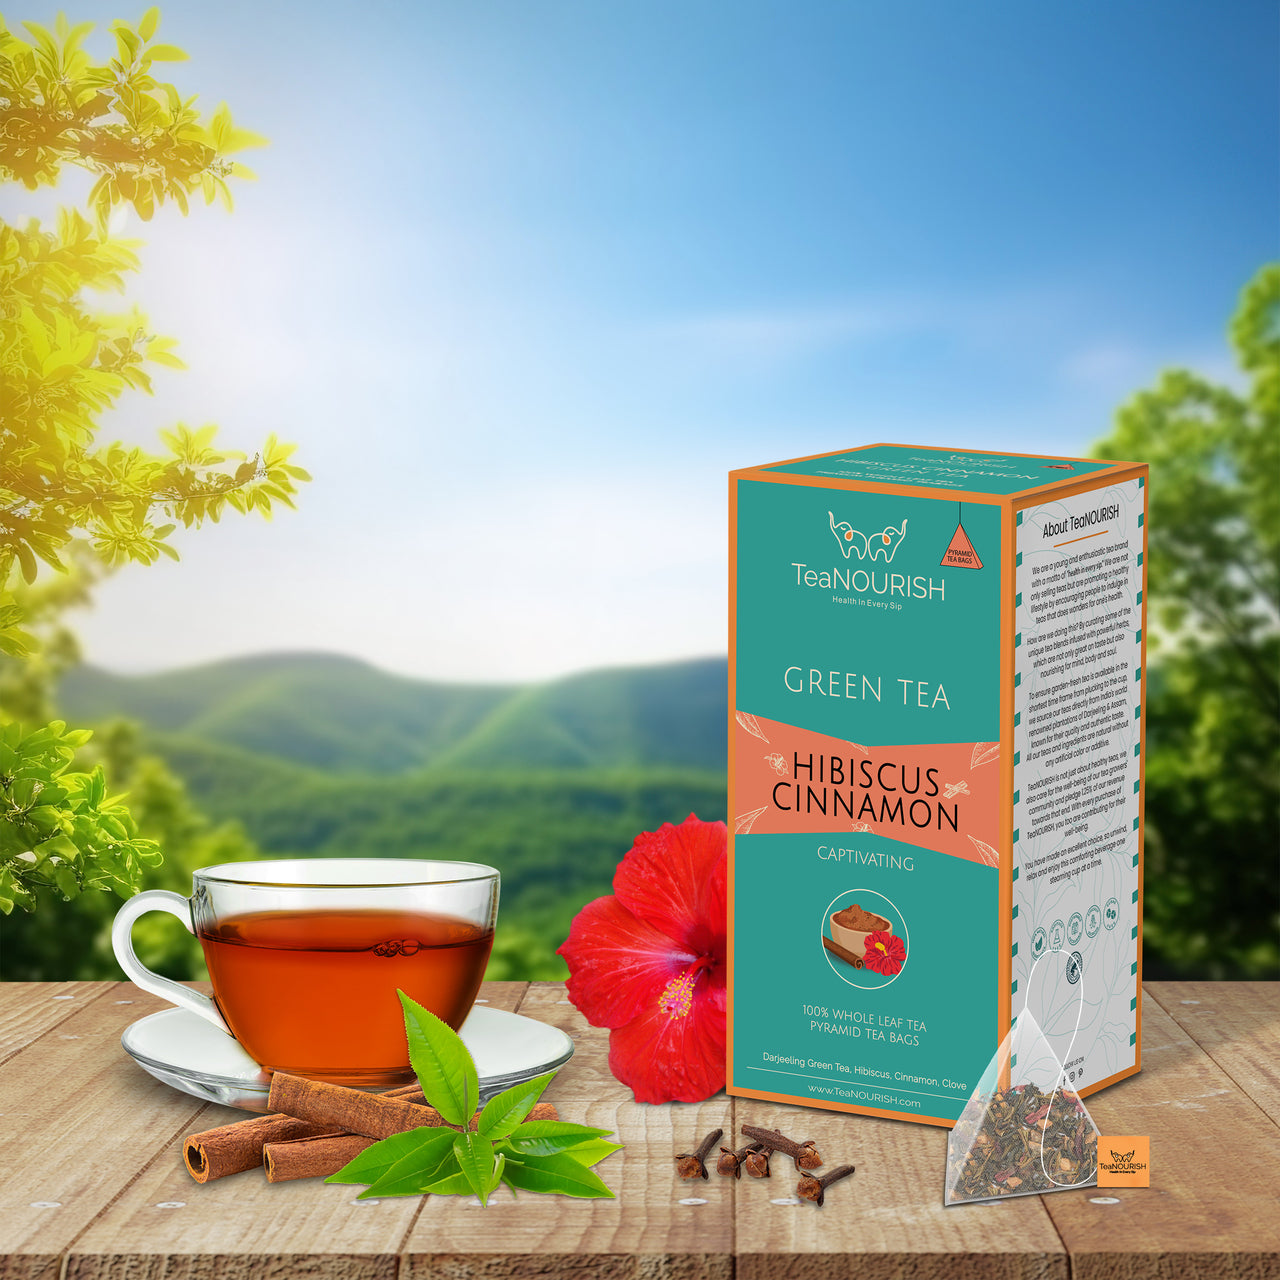 Hibiscus Cinnamon Green Tea